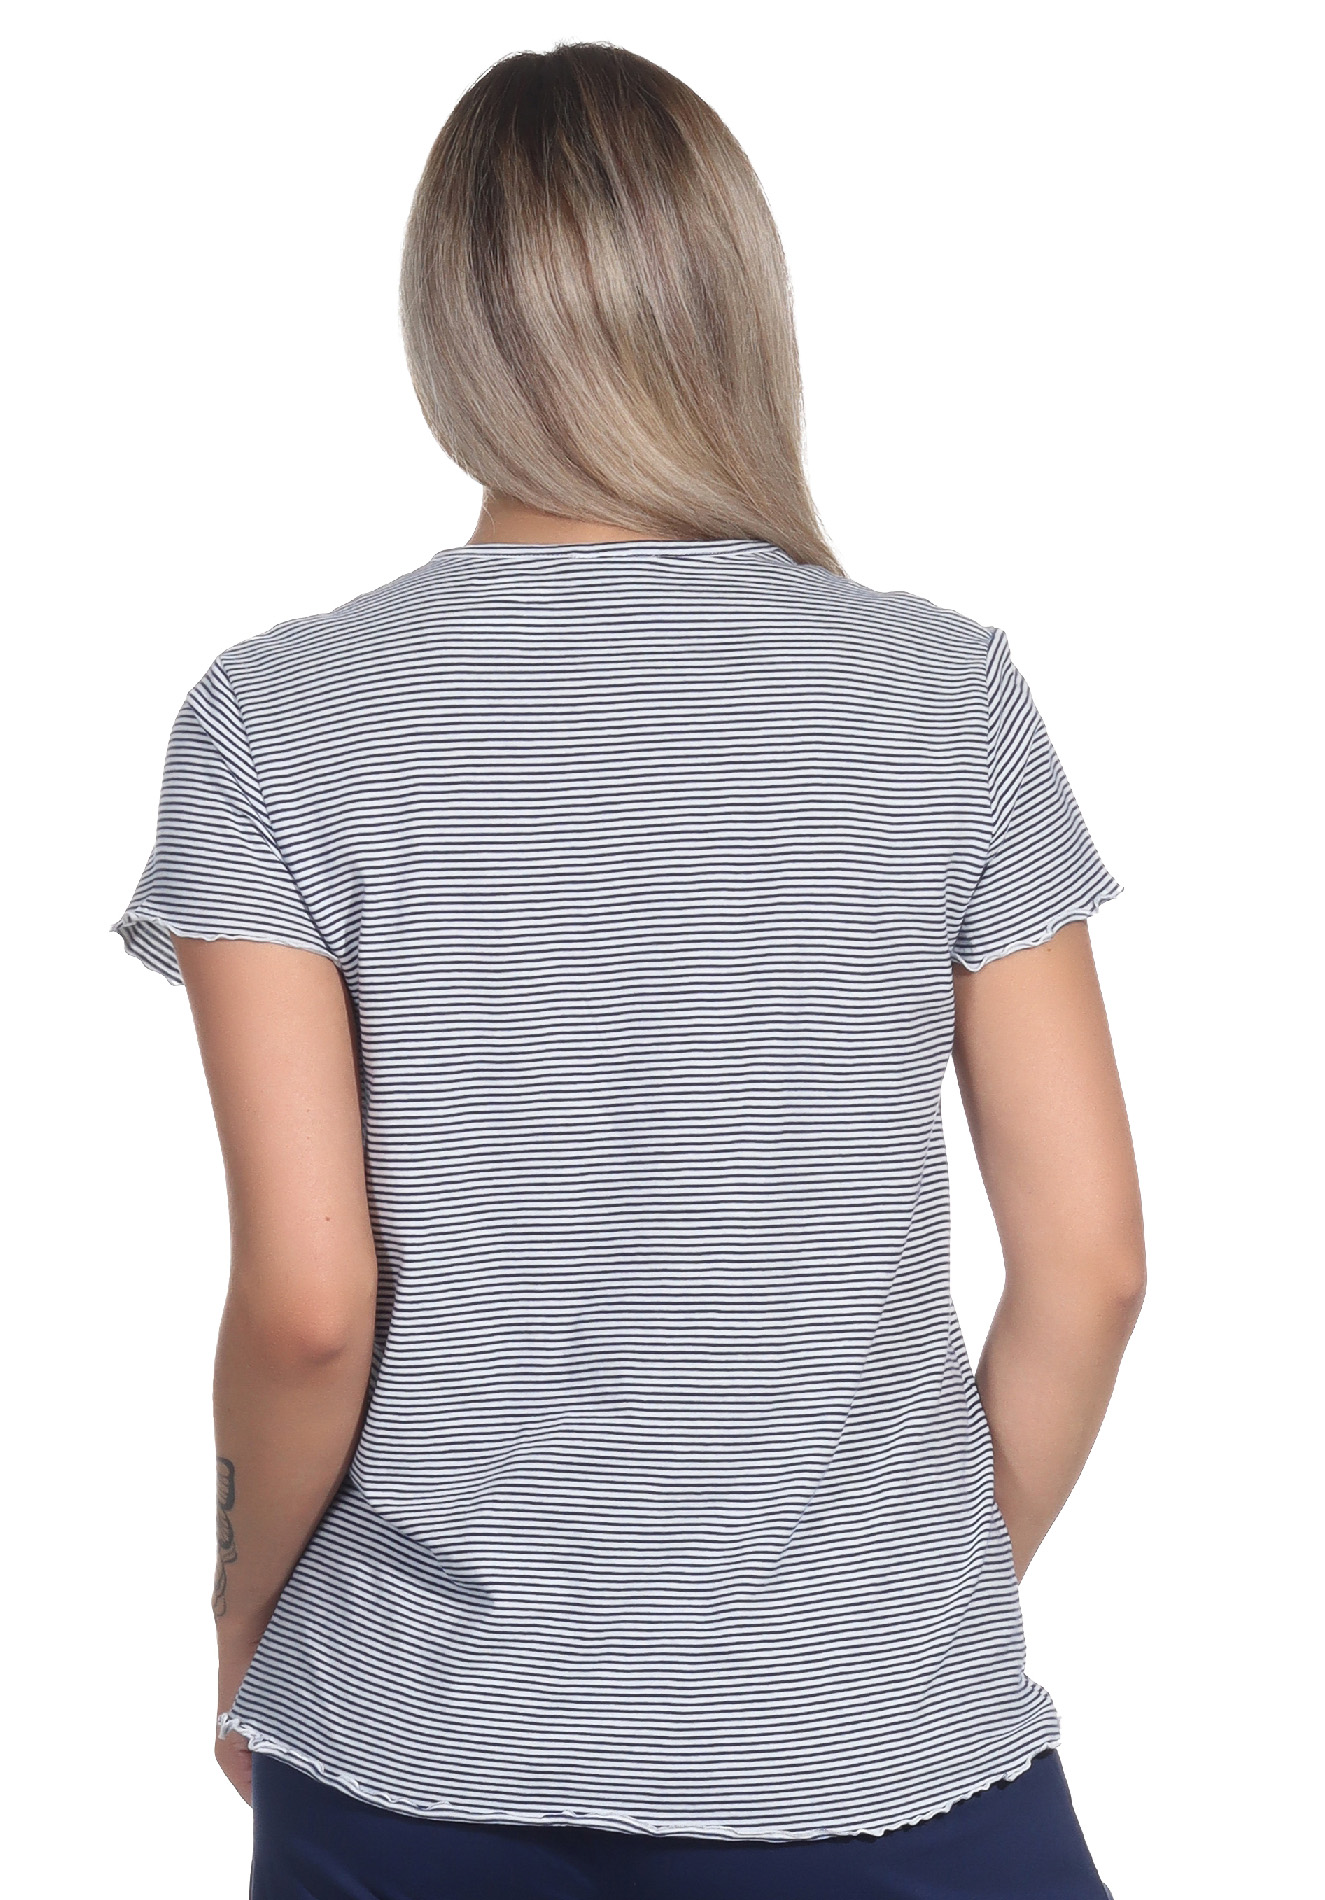 Damen Schlafanzug Shirt kurzarm Pyjama Oberteil Mix & Match in Streifenoptik